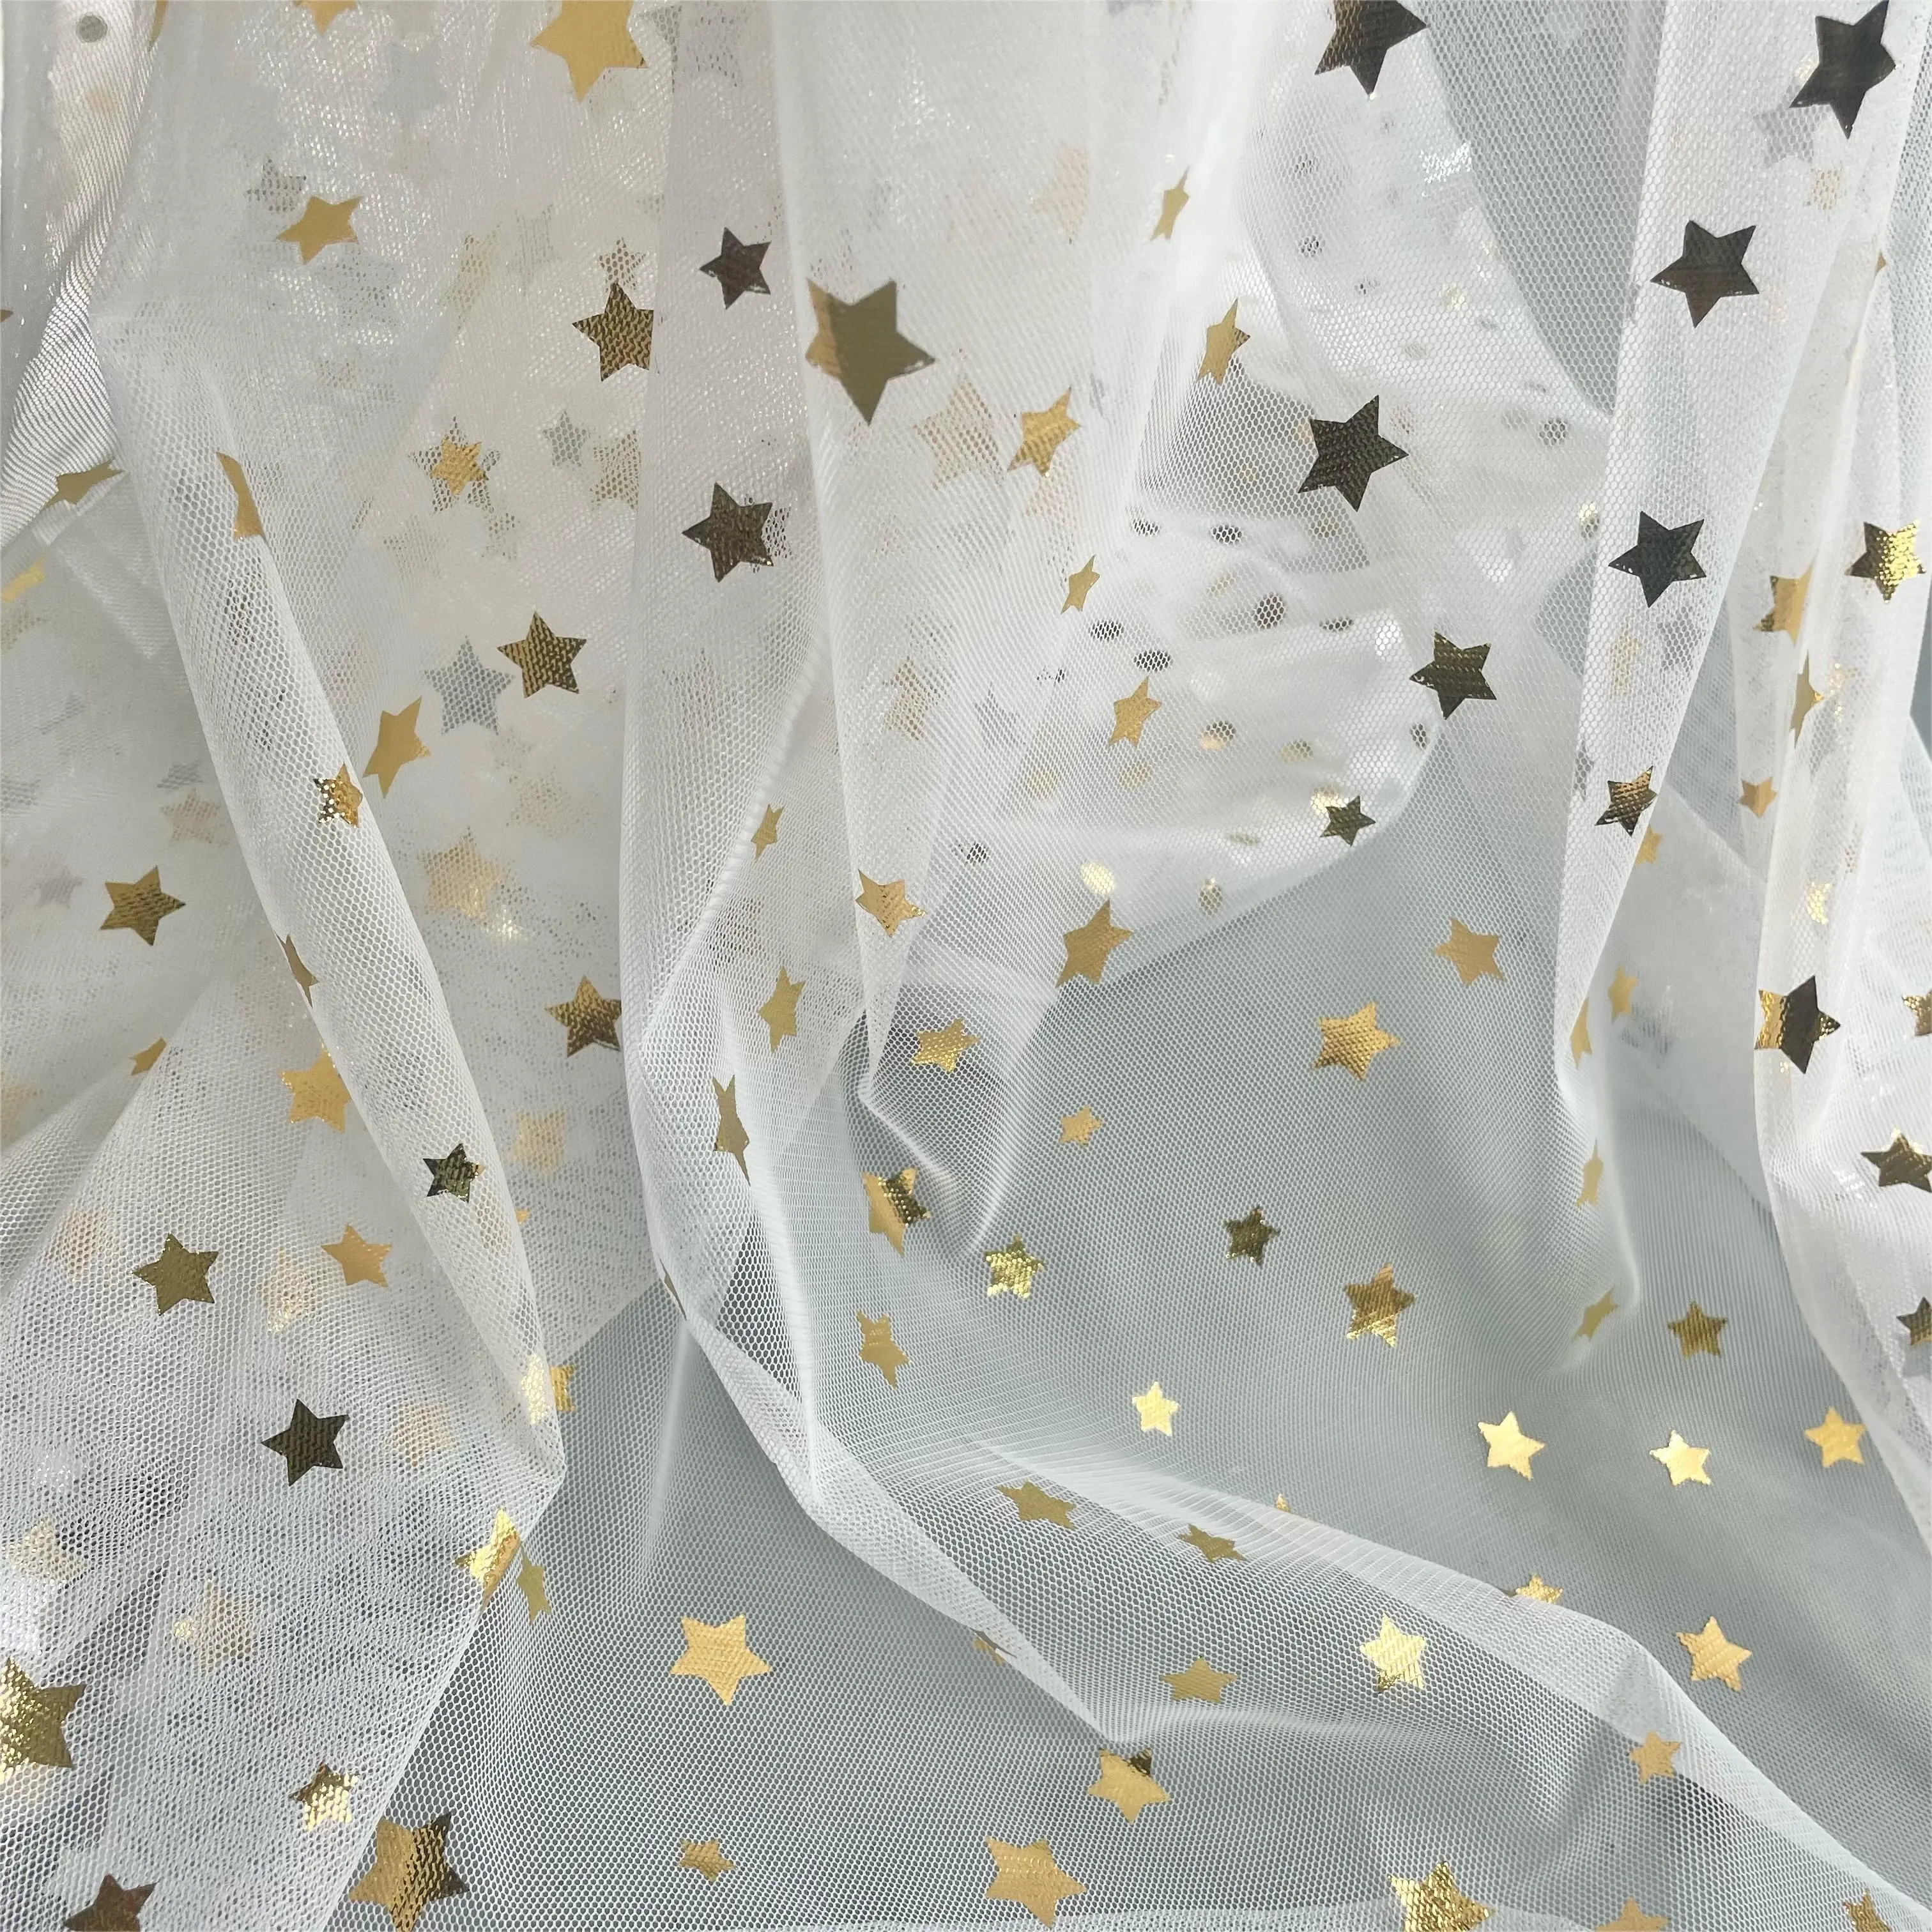 Vente en gros de tissu en maille hexagonale en polyester personnalisable, tissu en tulle étoilé avec étoiles dorées